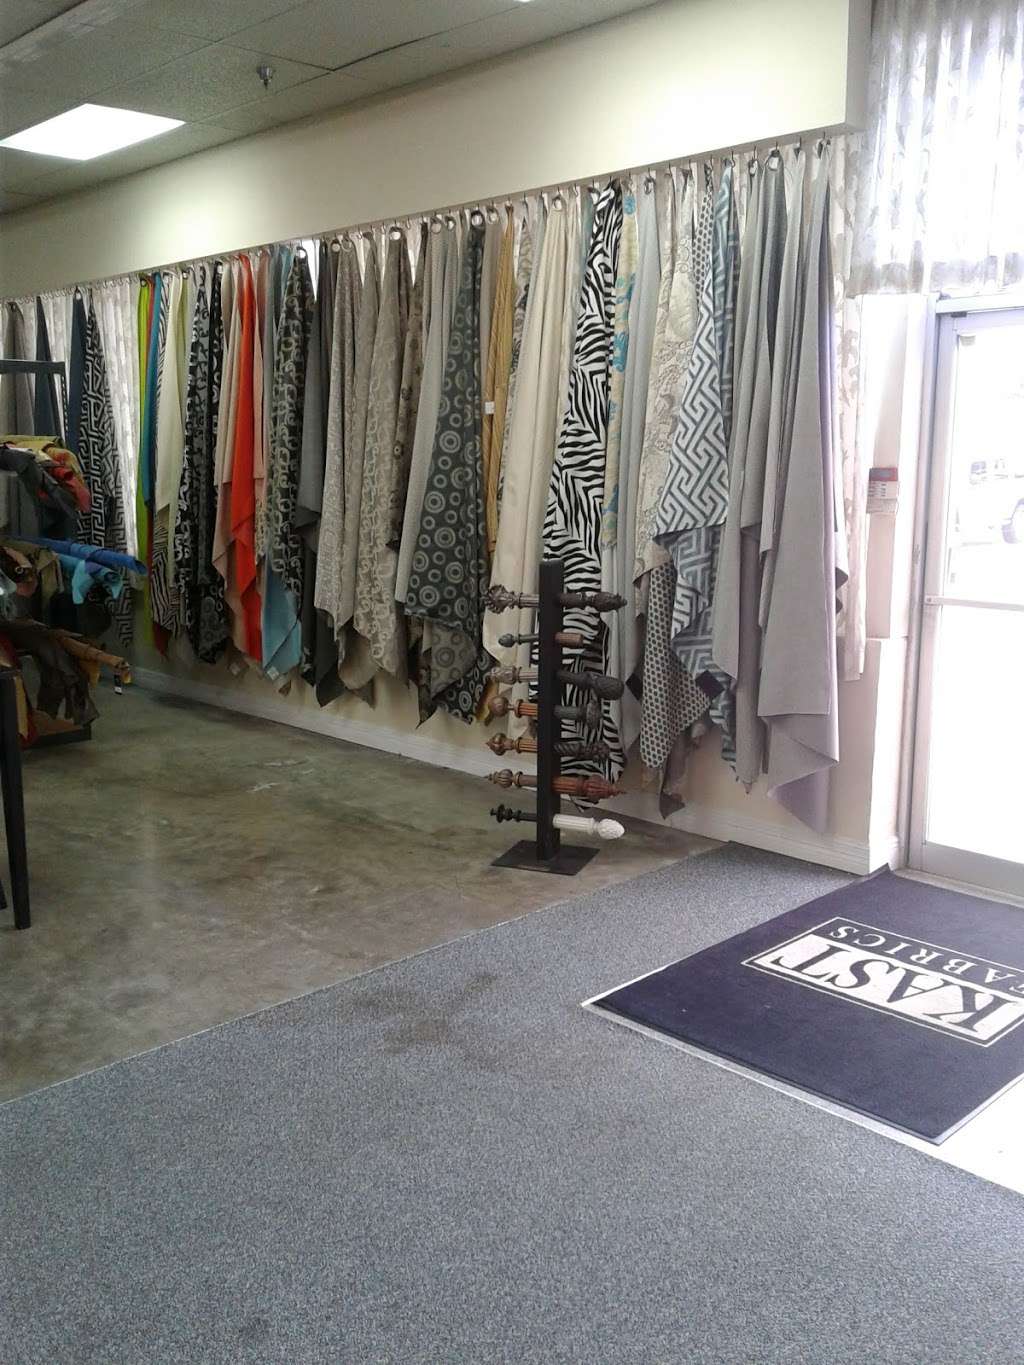 Kast Fabrics | 540 Preston Rd, Pasadena, TX 77503 | Phone: (713) 473-4848